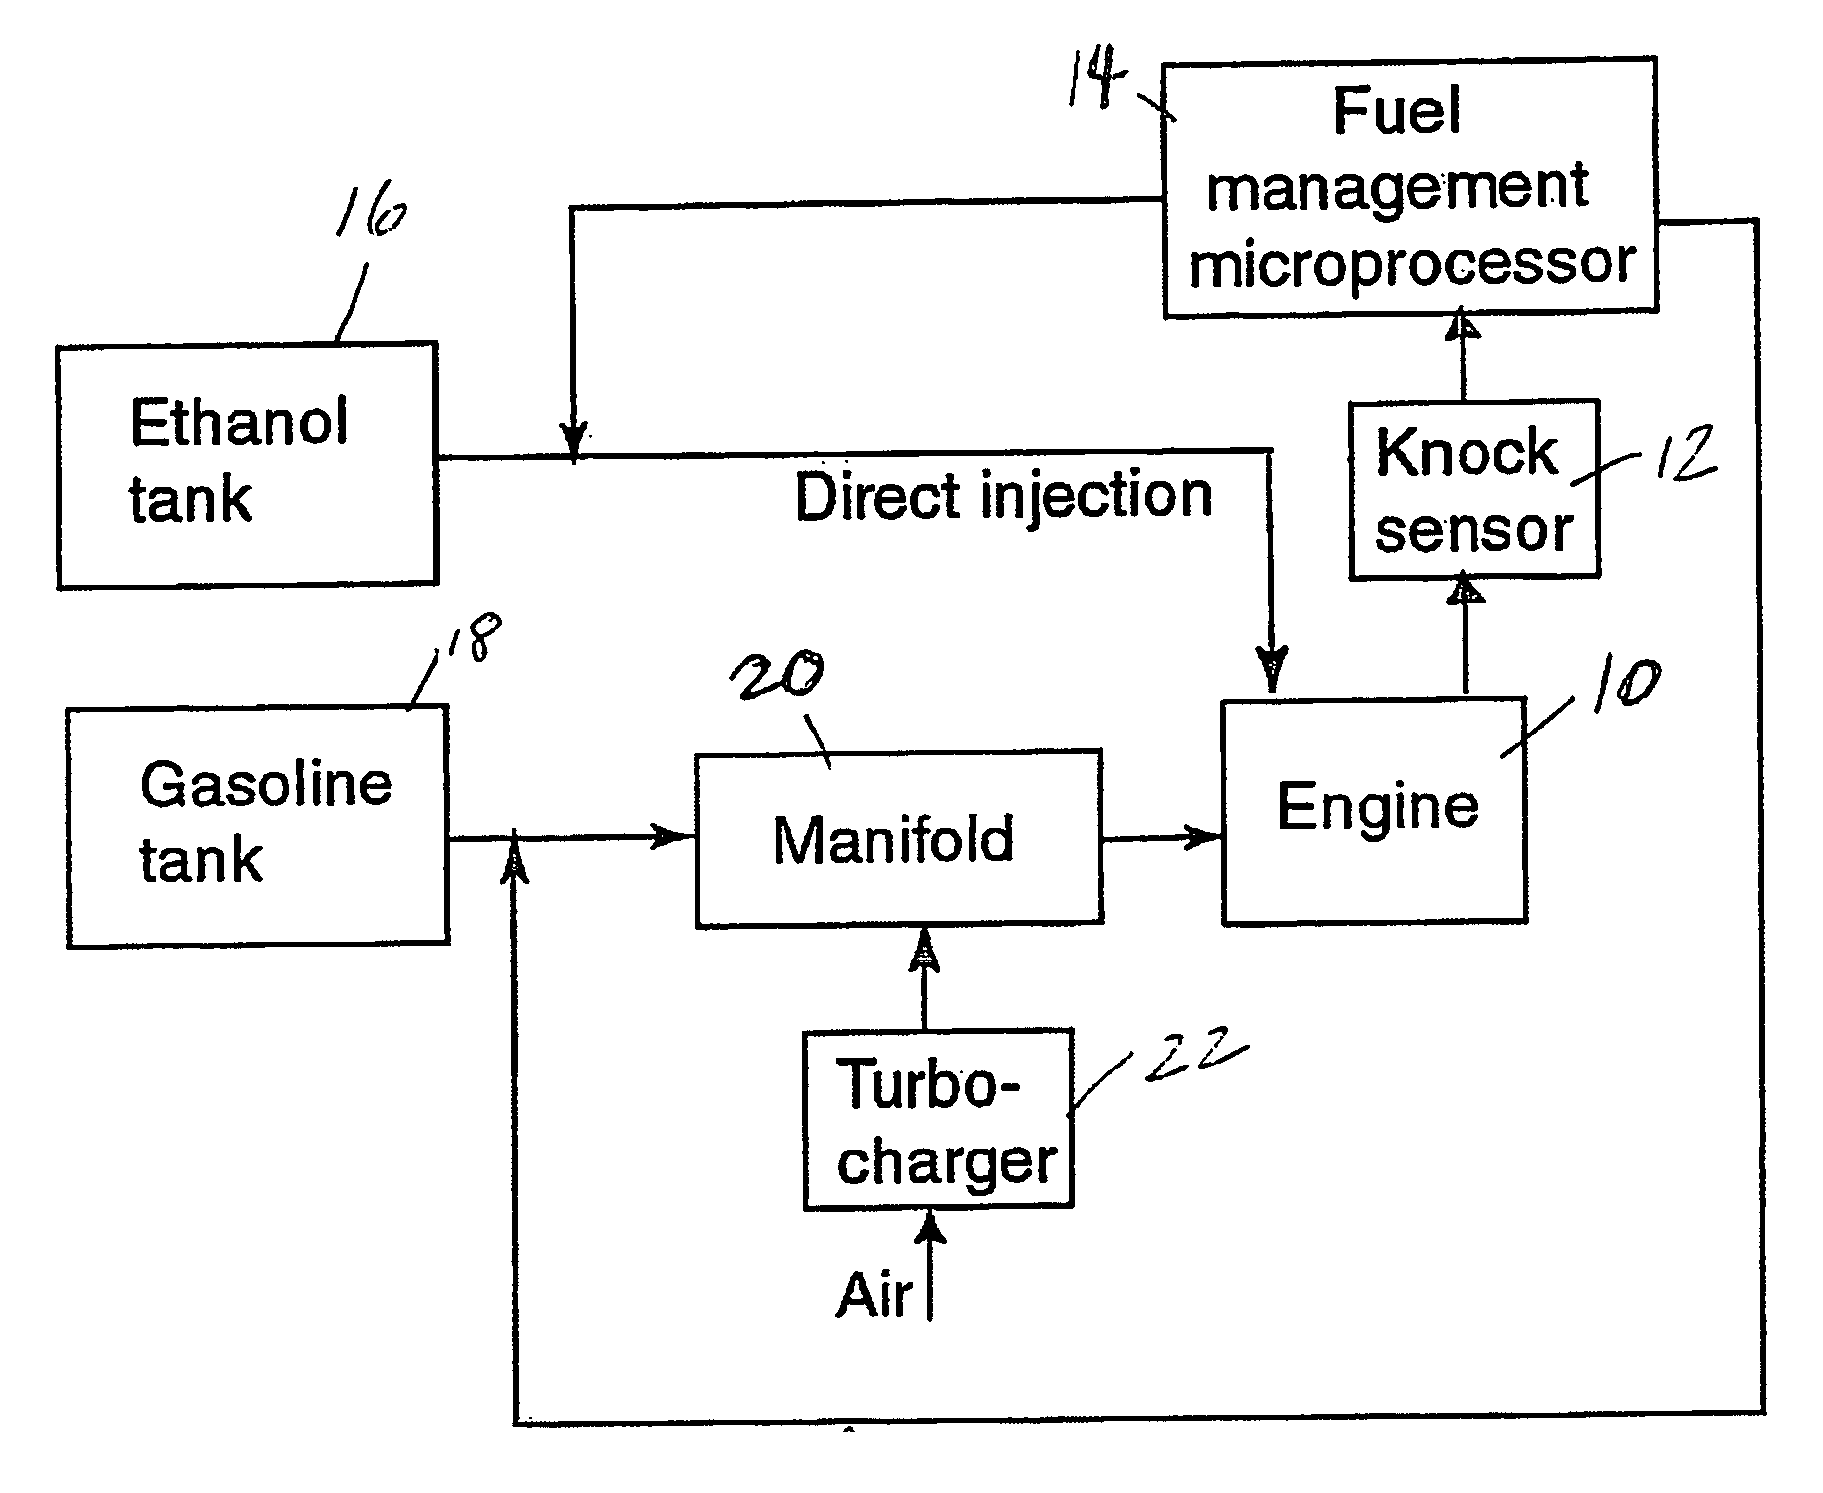 Fuel management system for variable ethanol octane enhancehment of gasoline engines